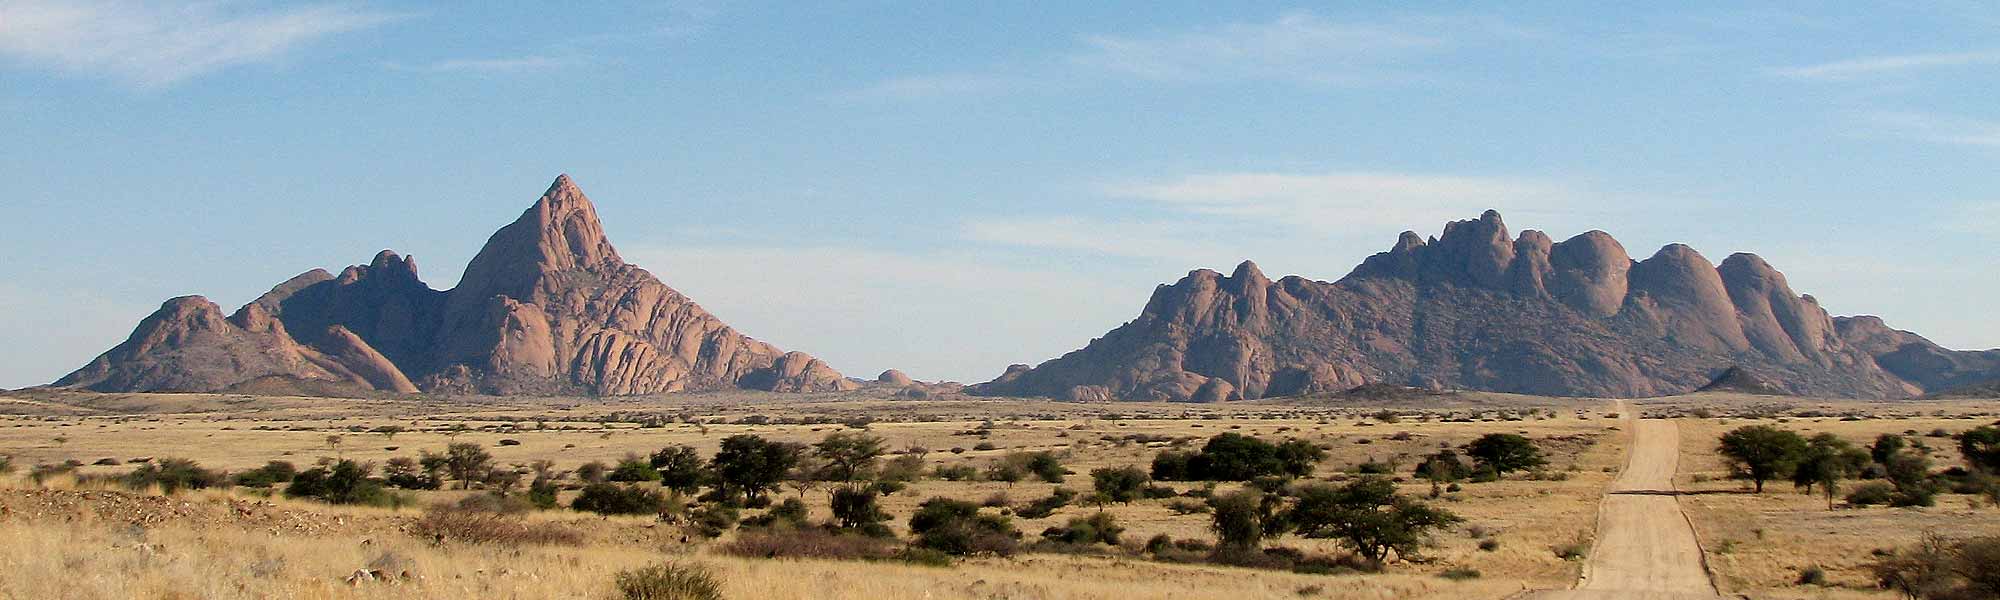 Spitzkoppe - Inselberg in the Erongo region Namibia